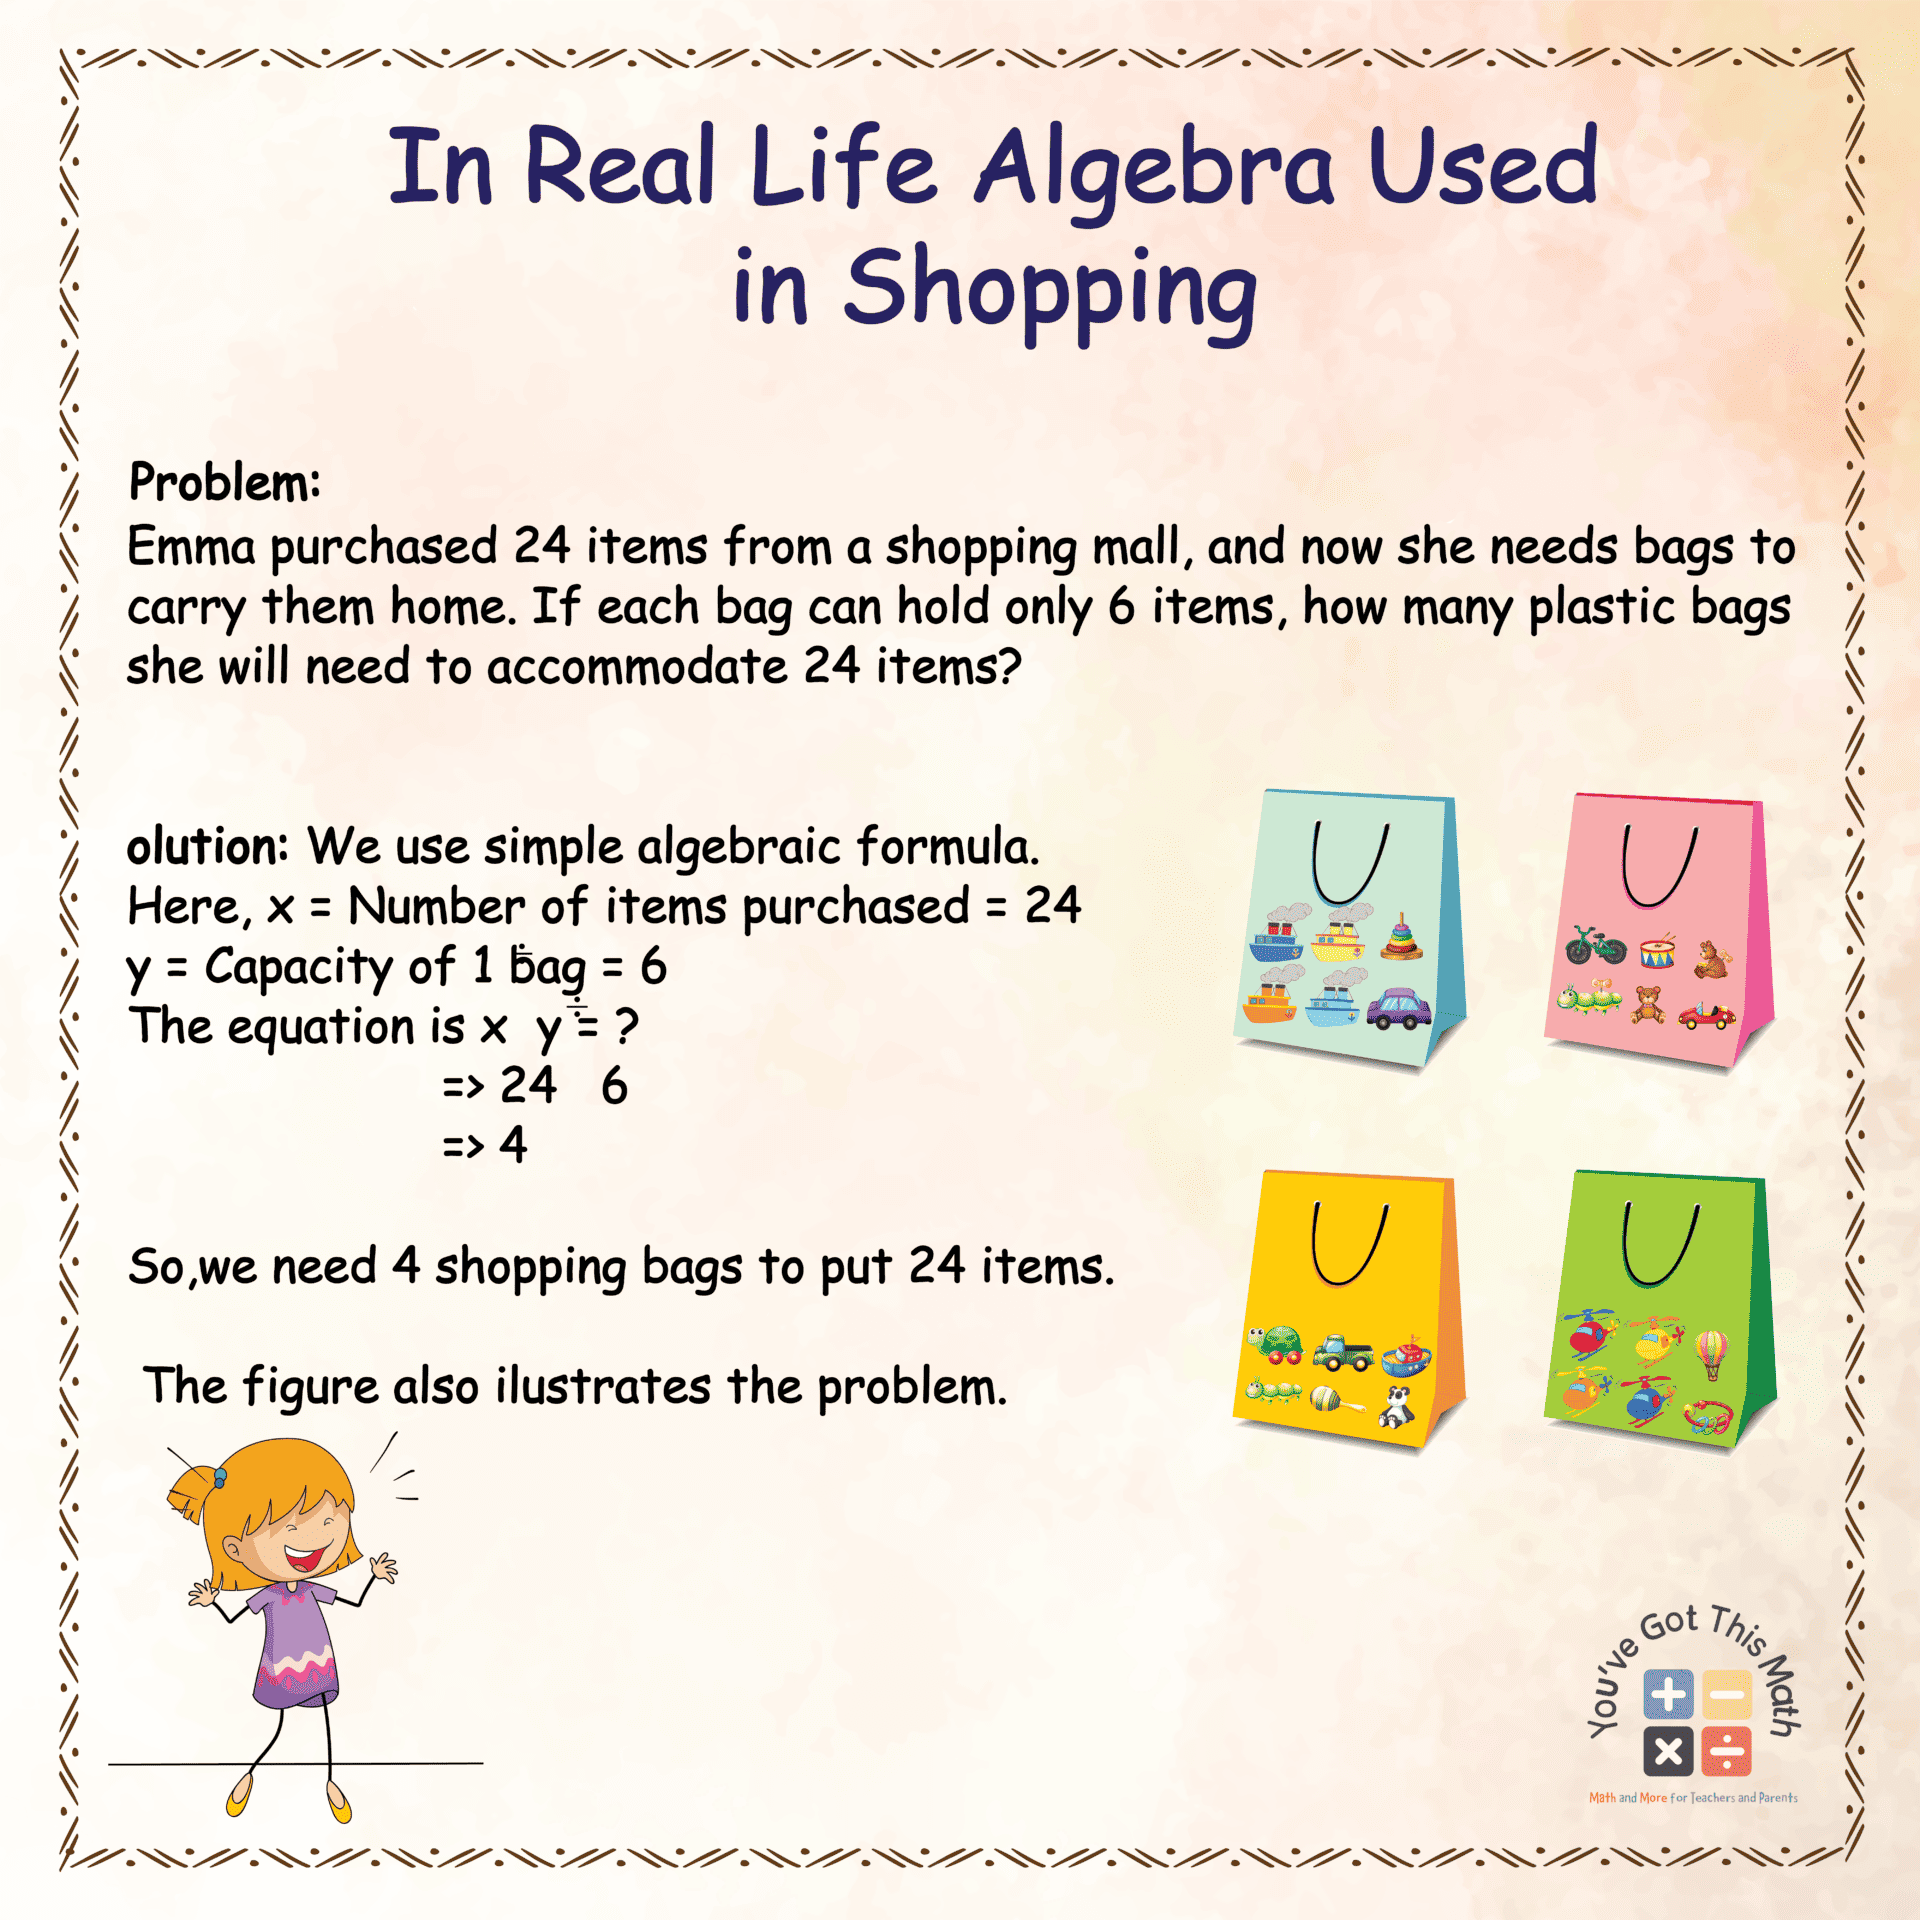 In Real Life Algebra Used in Shopping